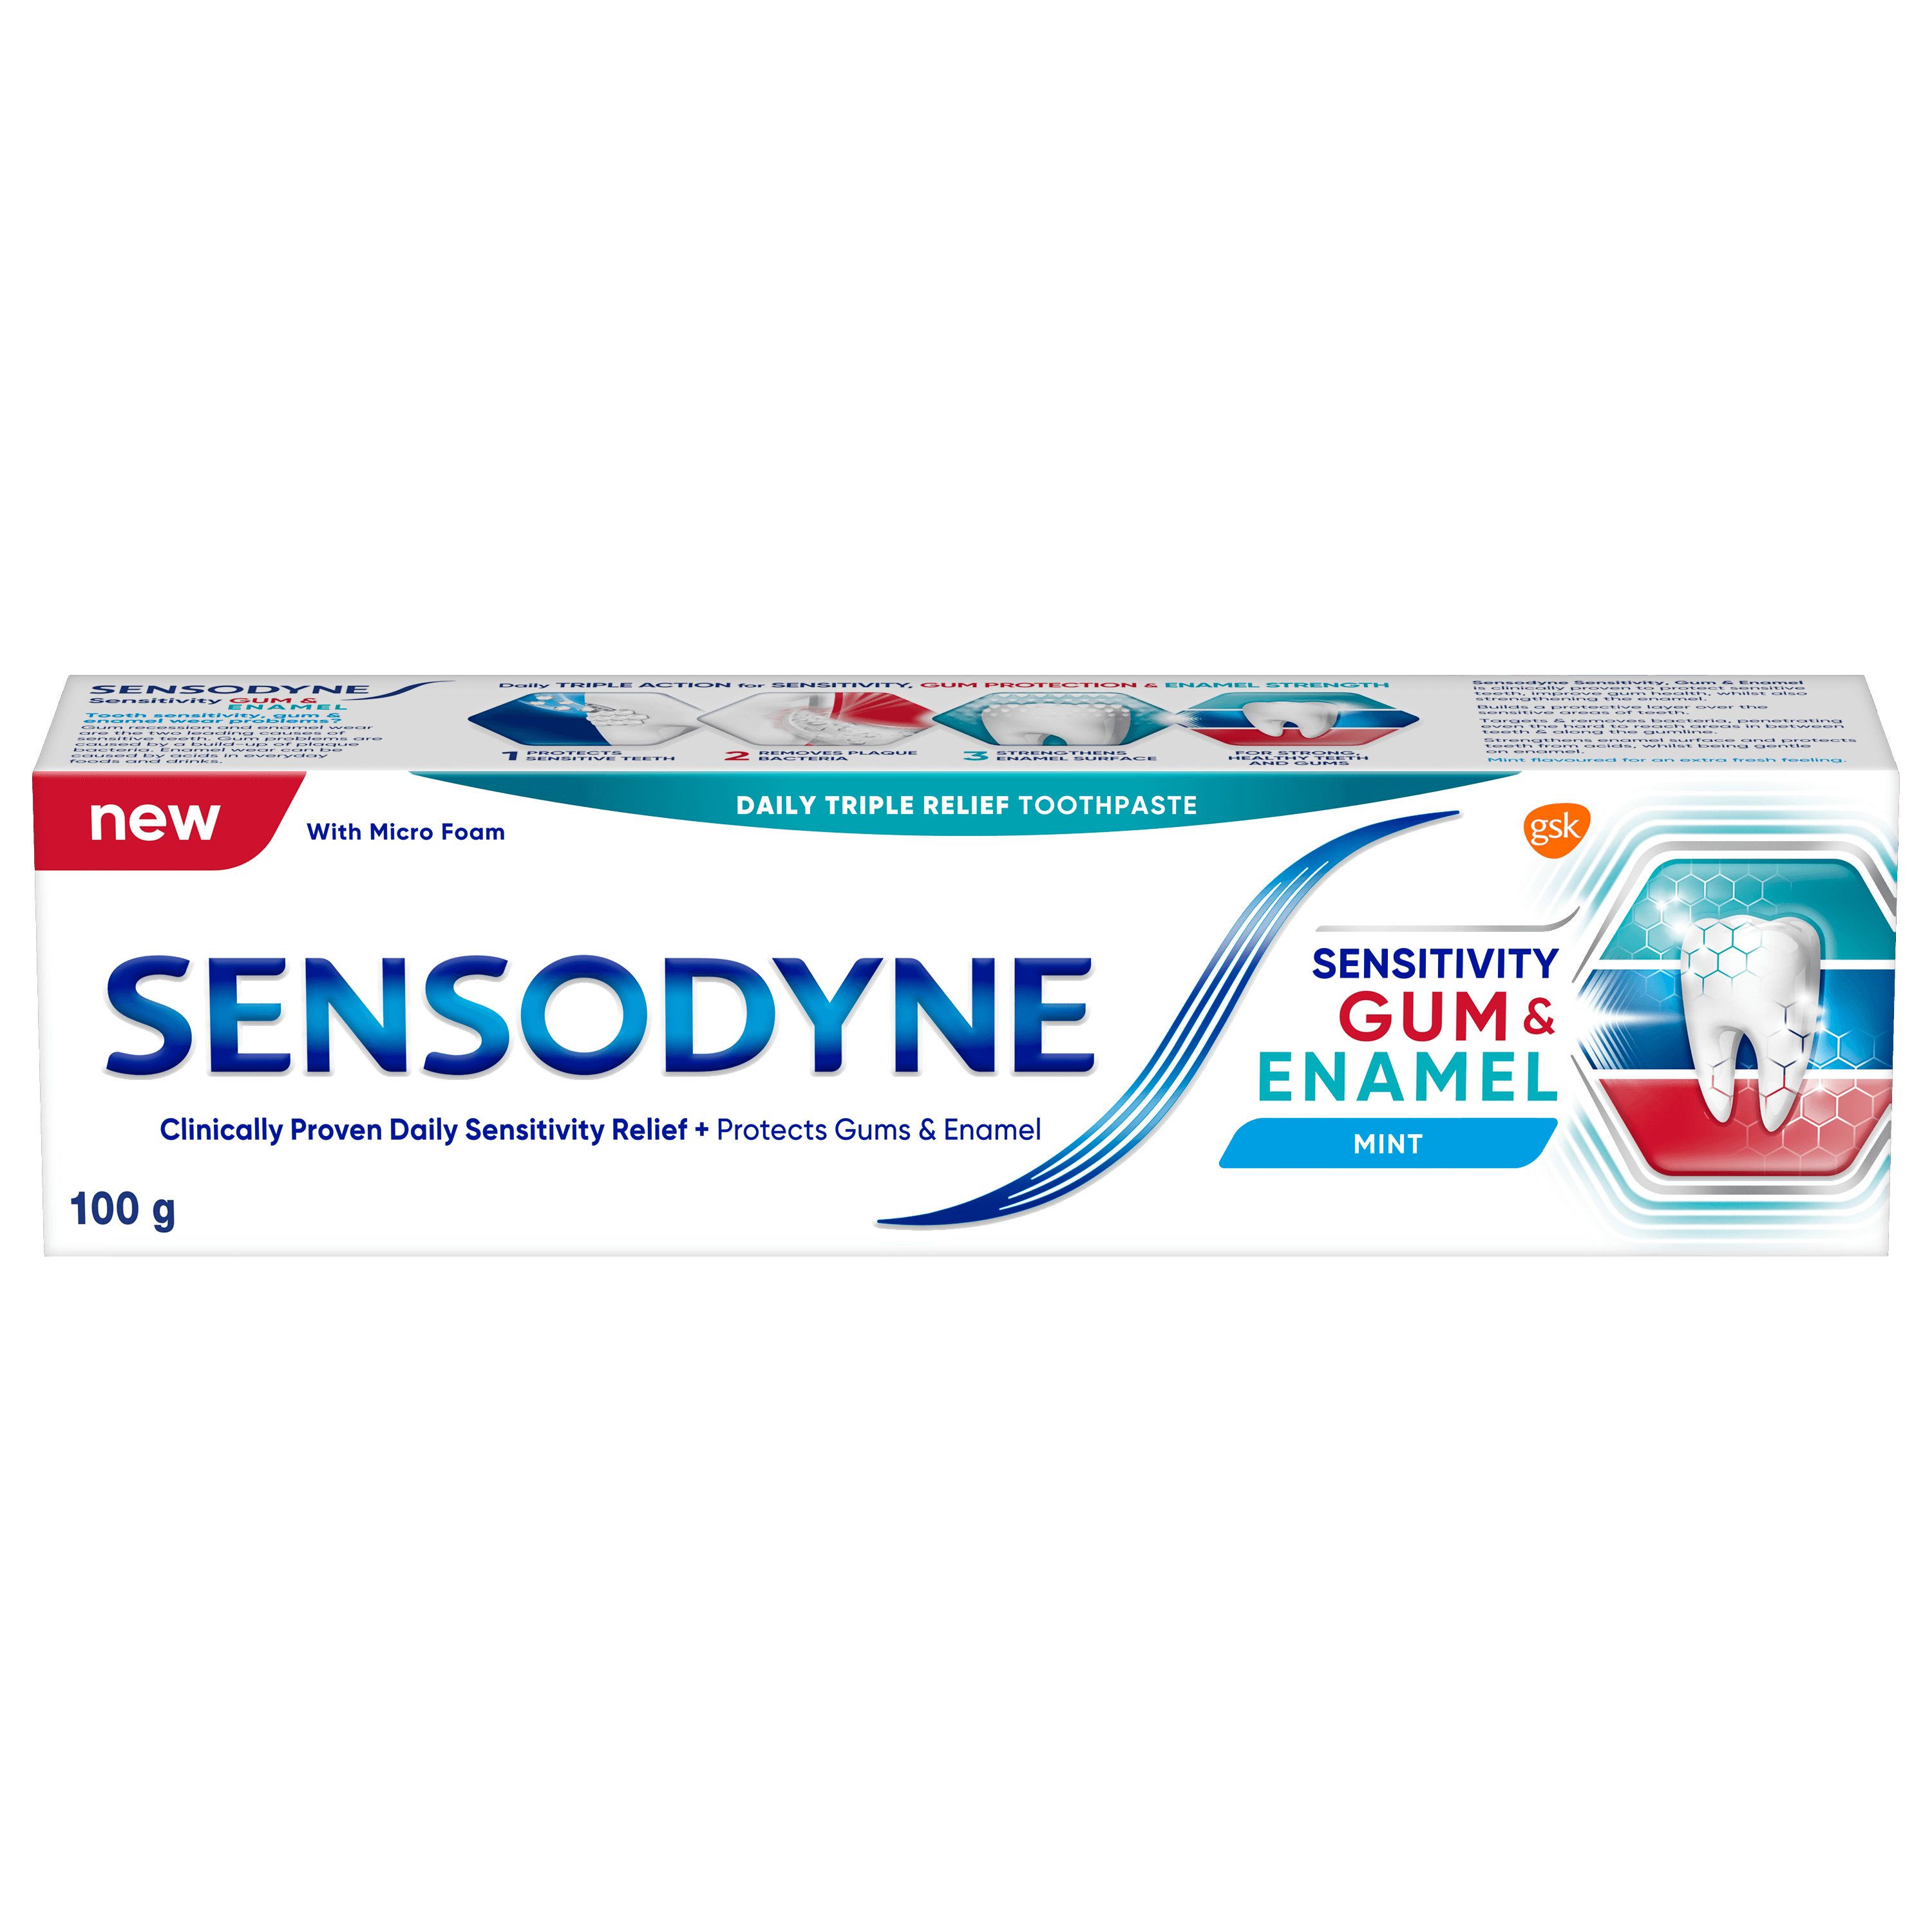 sensodyne-sensitivity-and-gum-whitening-toothpaste1